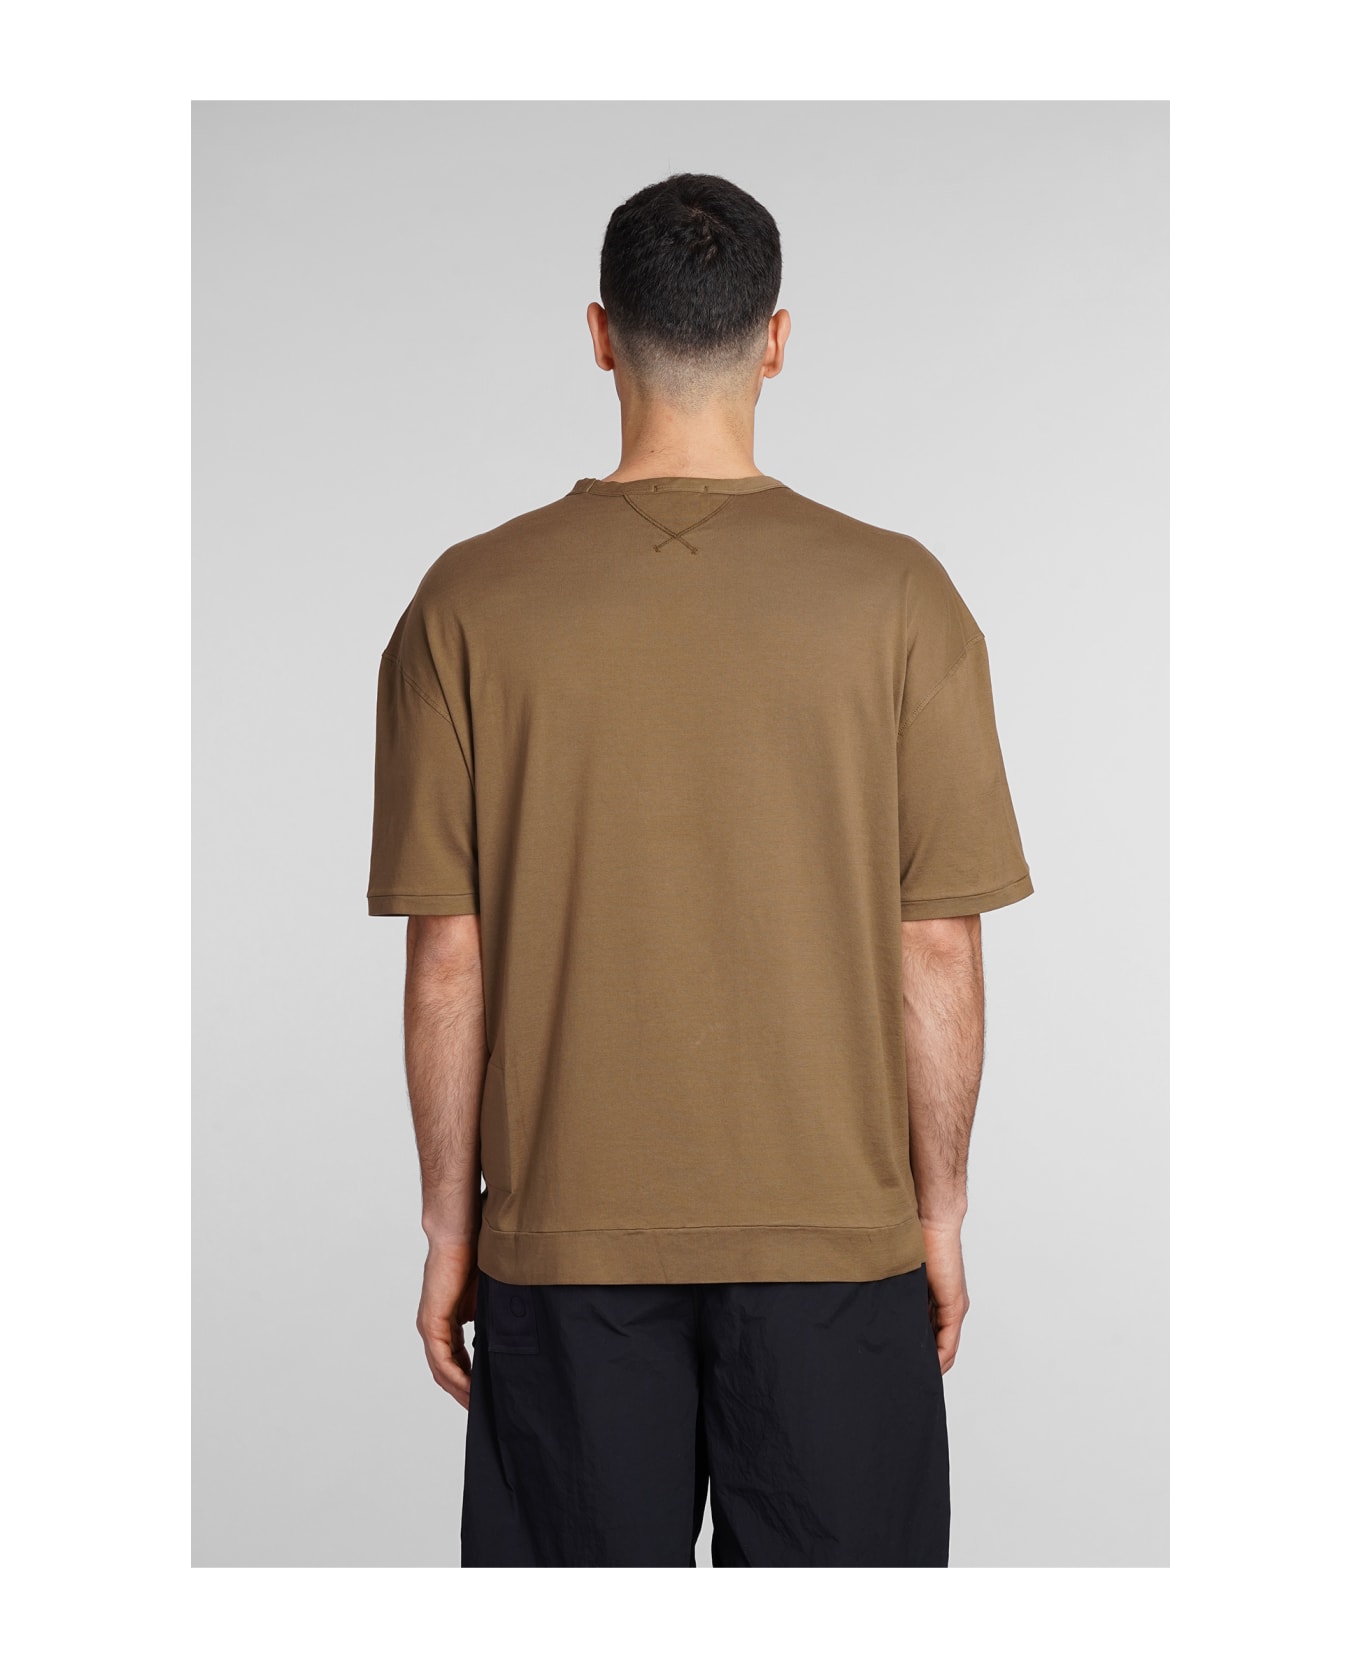 Ten C T-shirt In Brown Cotton - brown